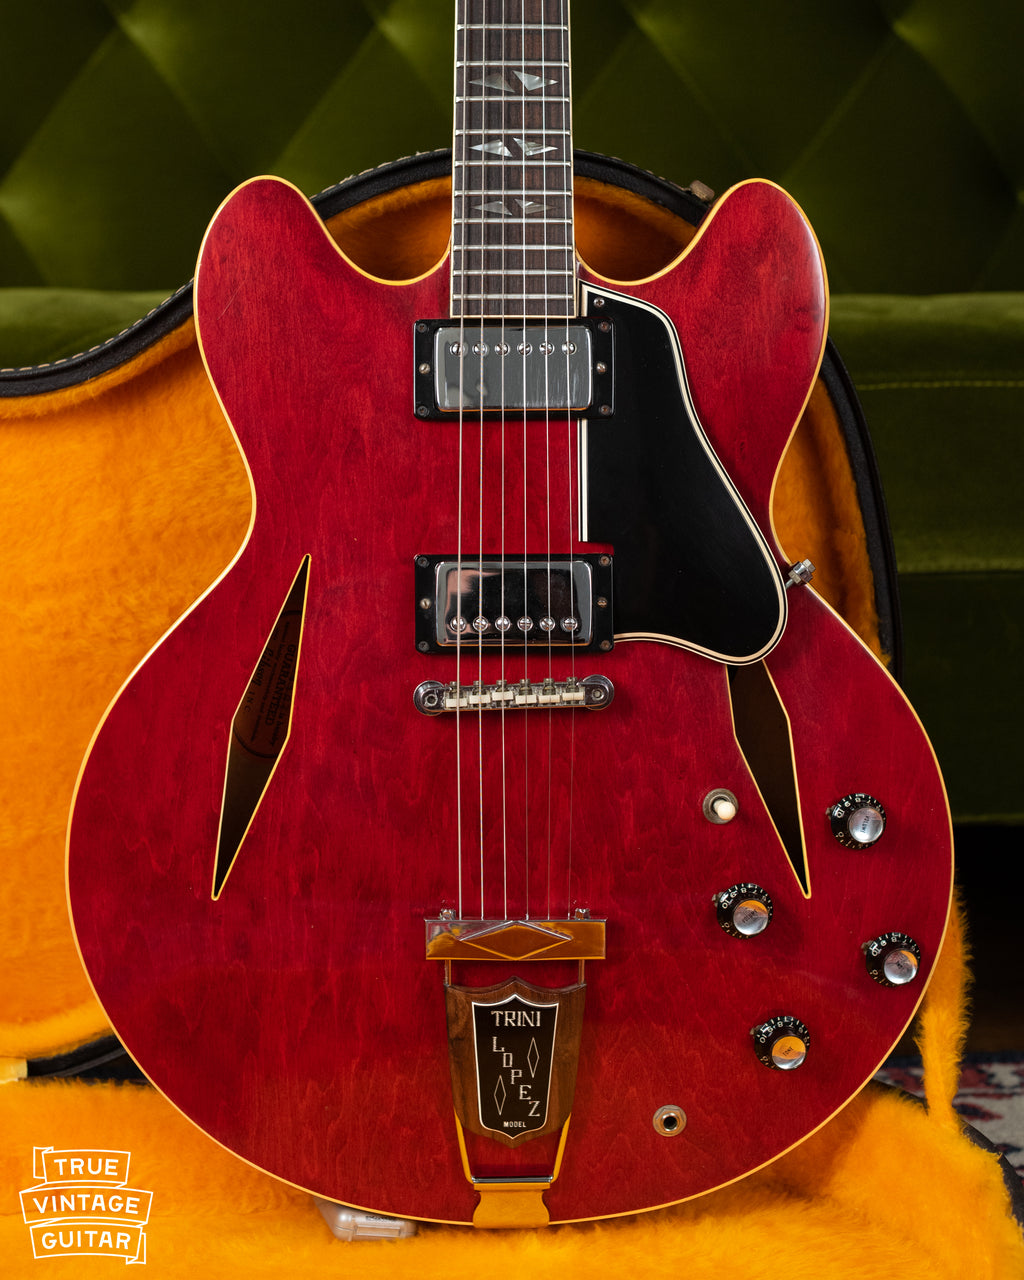 1966 Gibson Trini Lopez Standard guitar